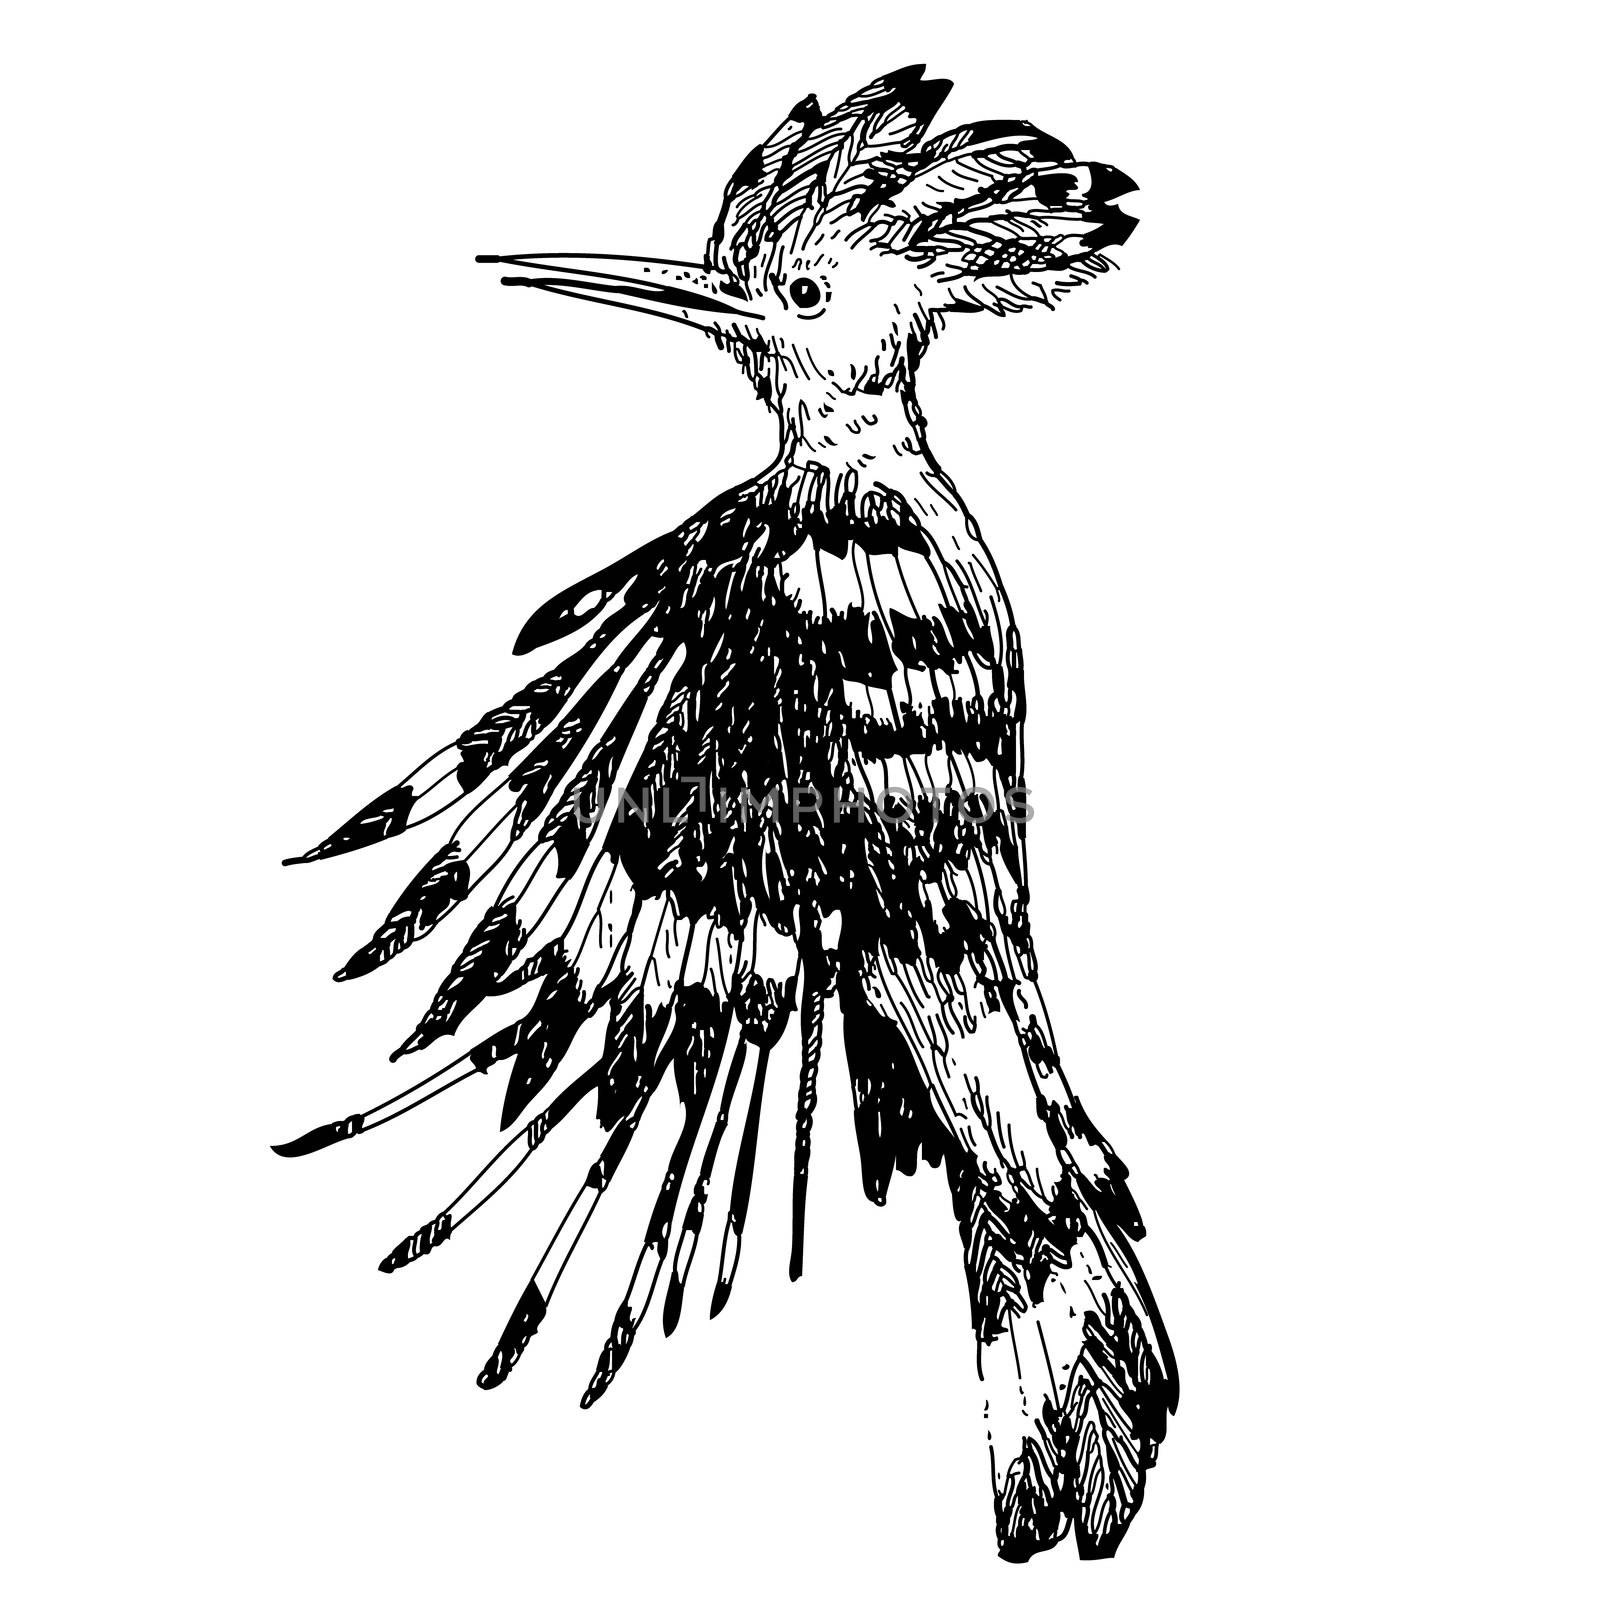 Hoopoe bird doodle hand drawn by simpleBE